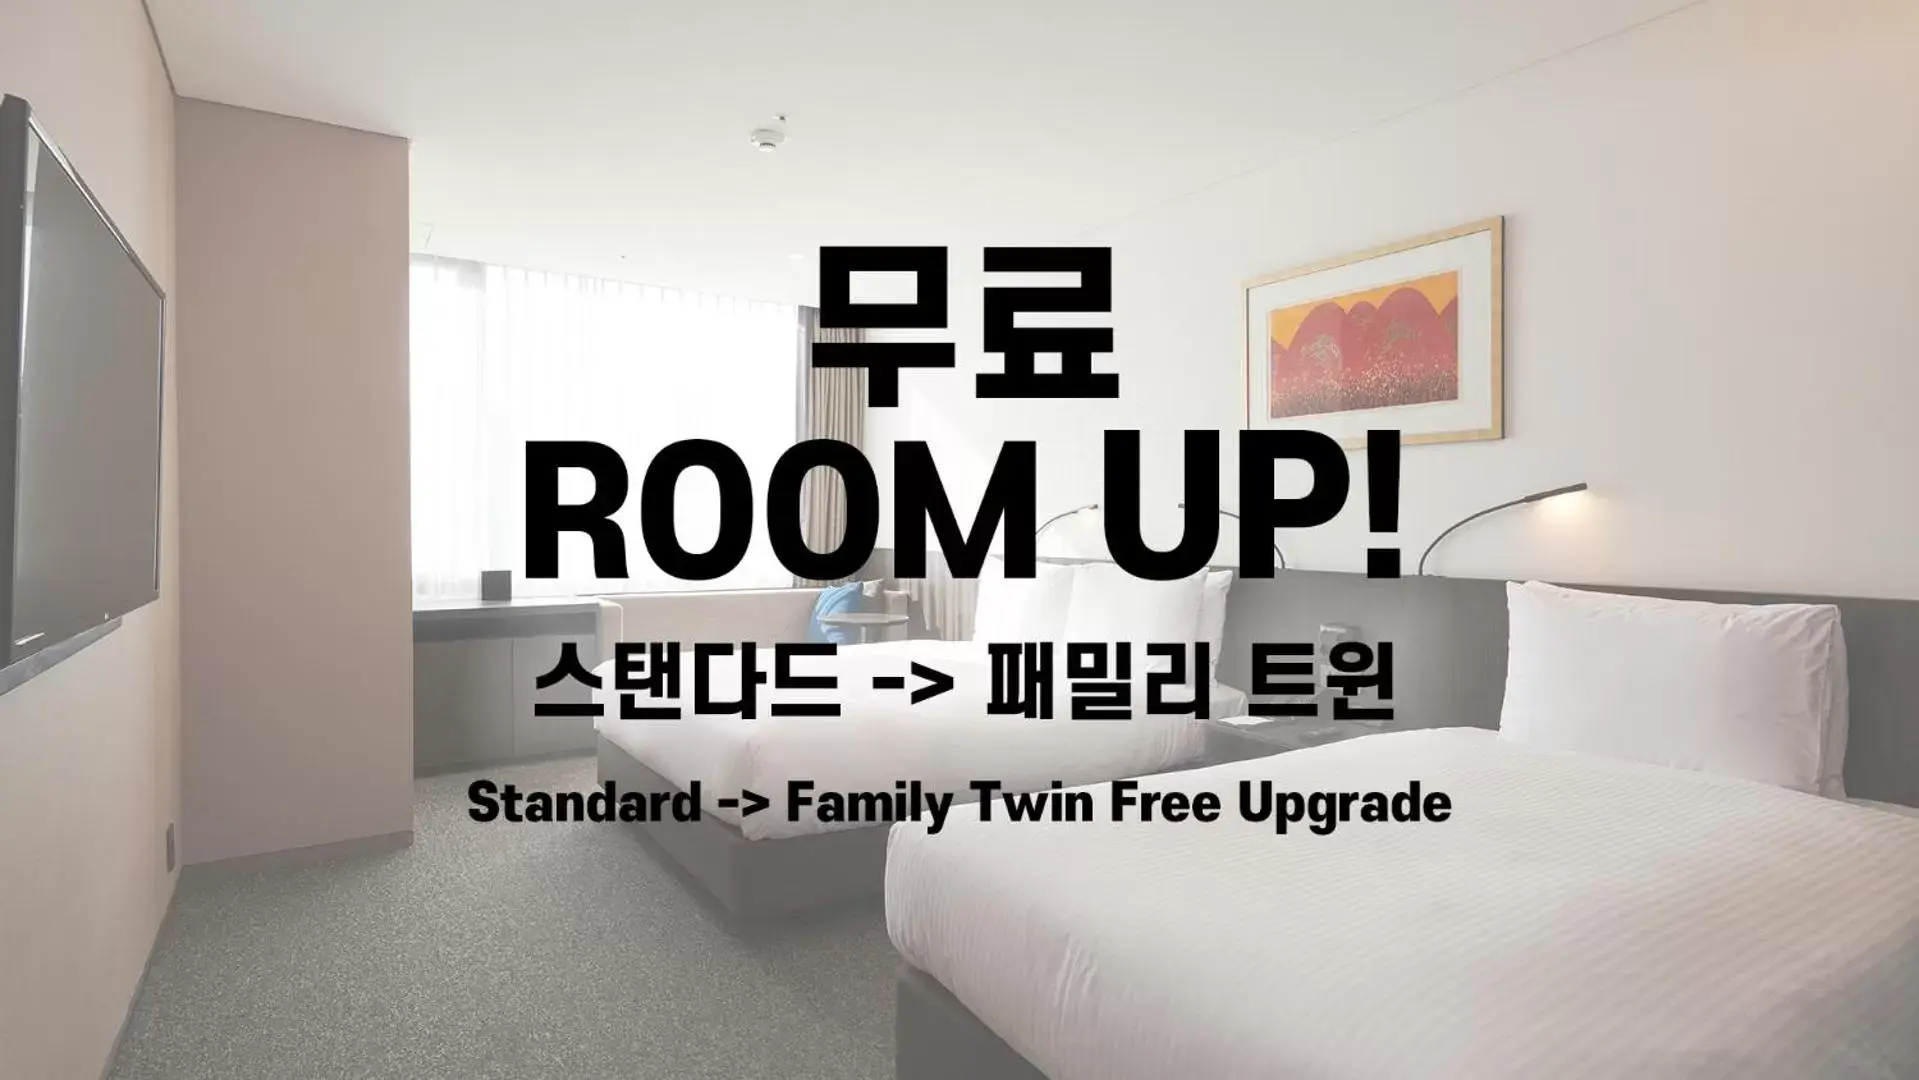 Text overlay in Nine Tree Premier Hotel Myeongdong 2